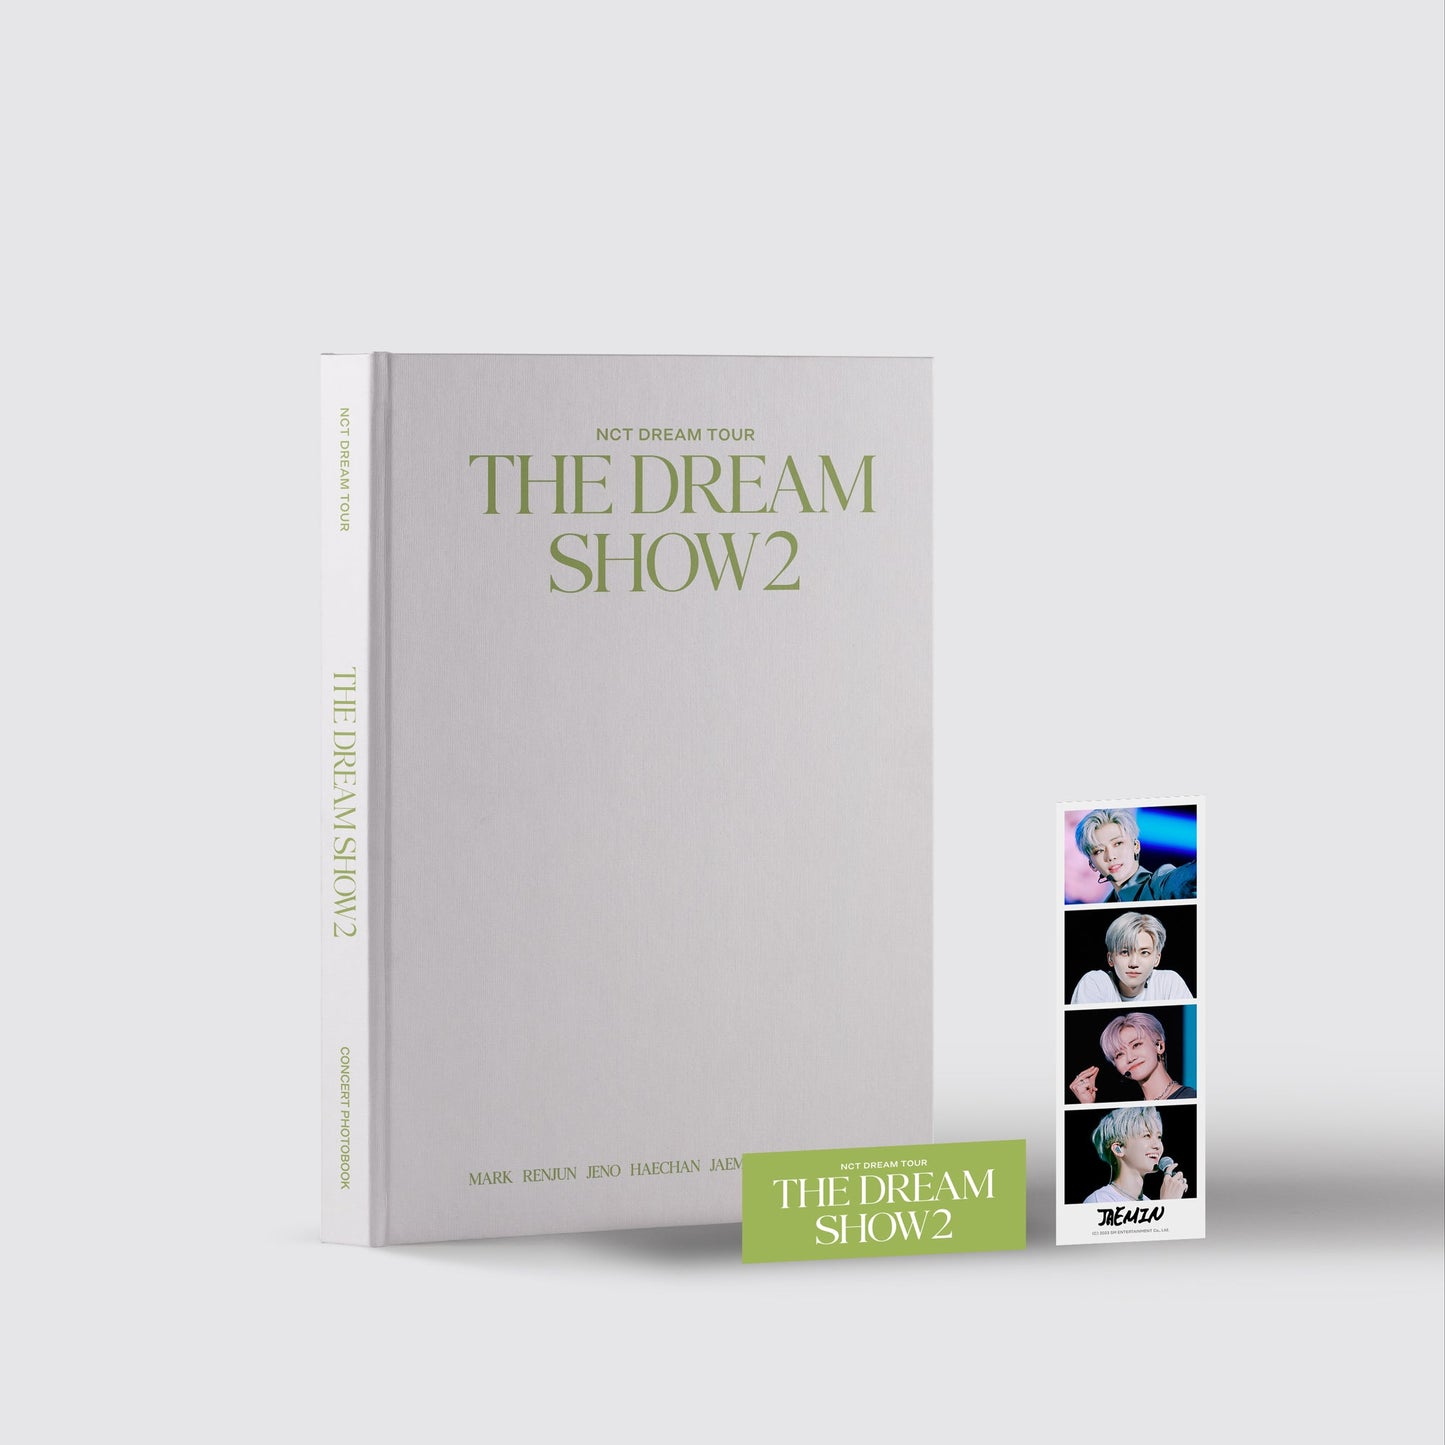 NCT DREAM TOUR 'THE DREAM SHOW2' CONCERT PHOTOBOOK COVER